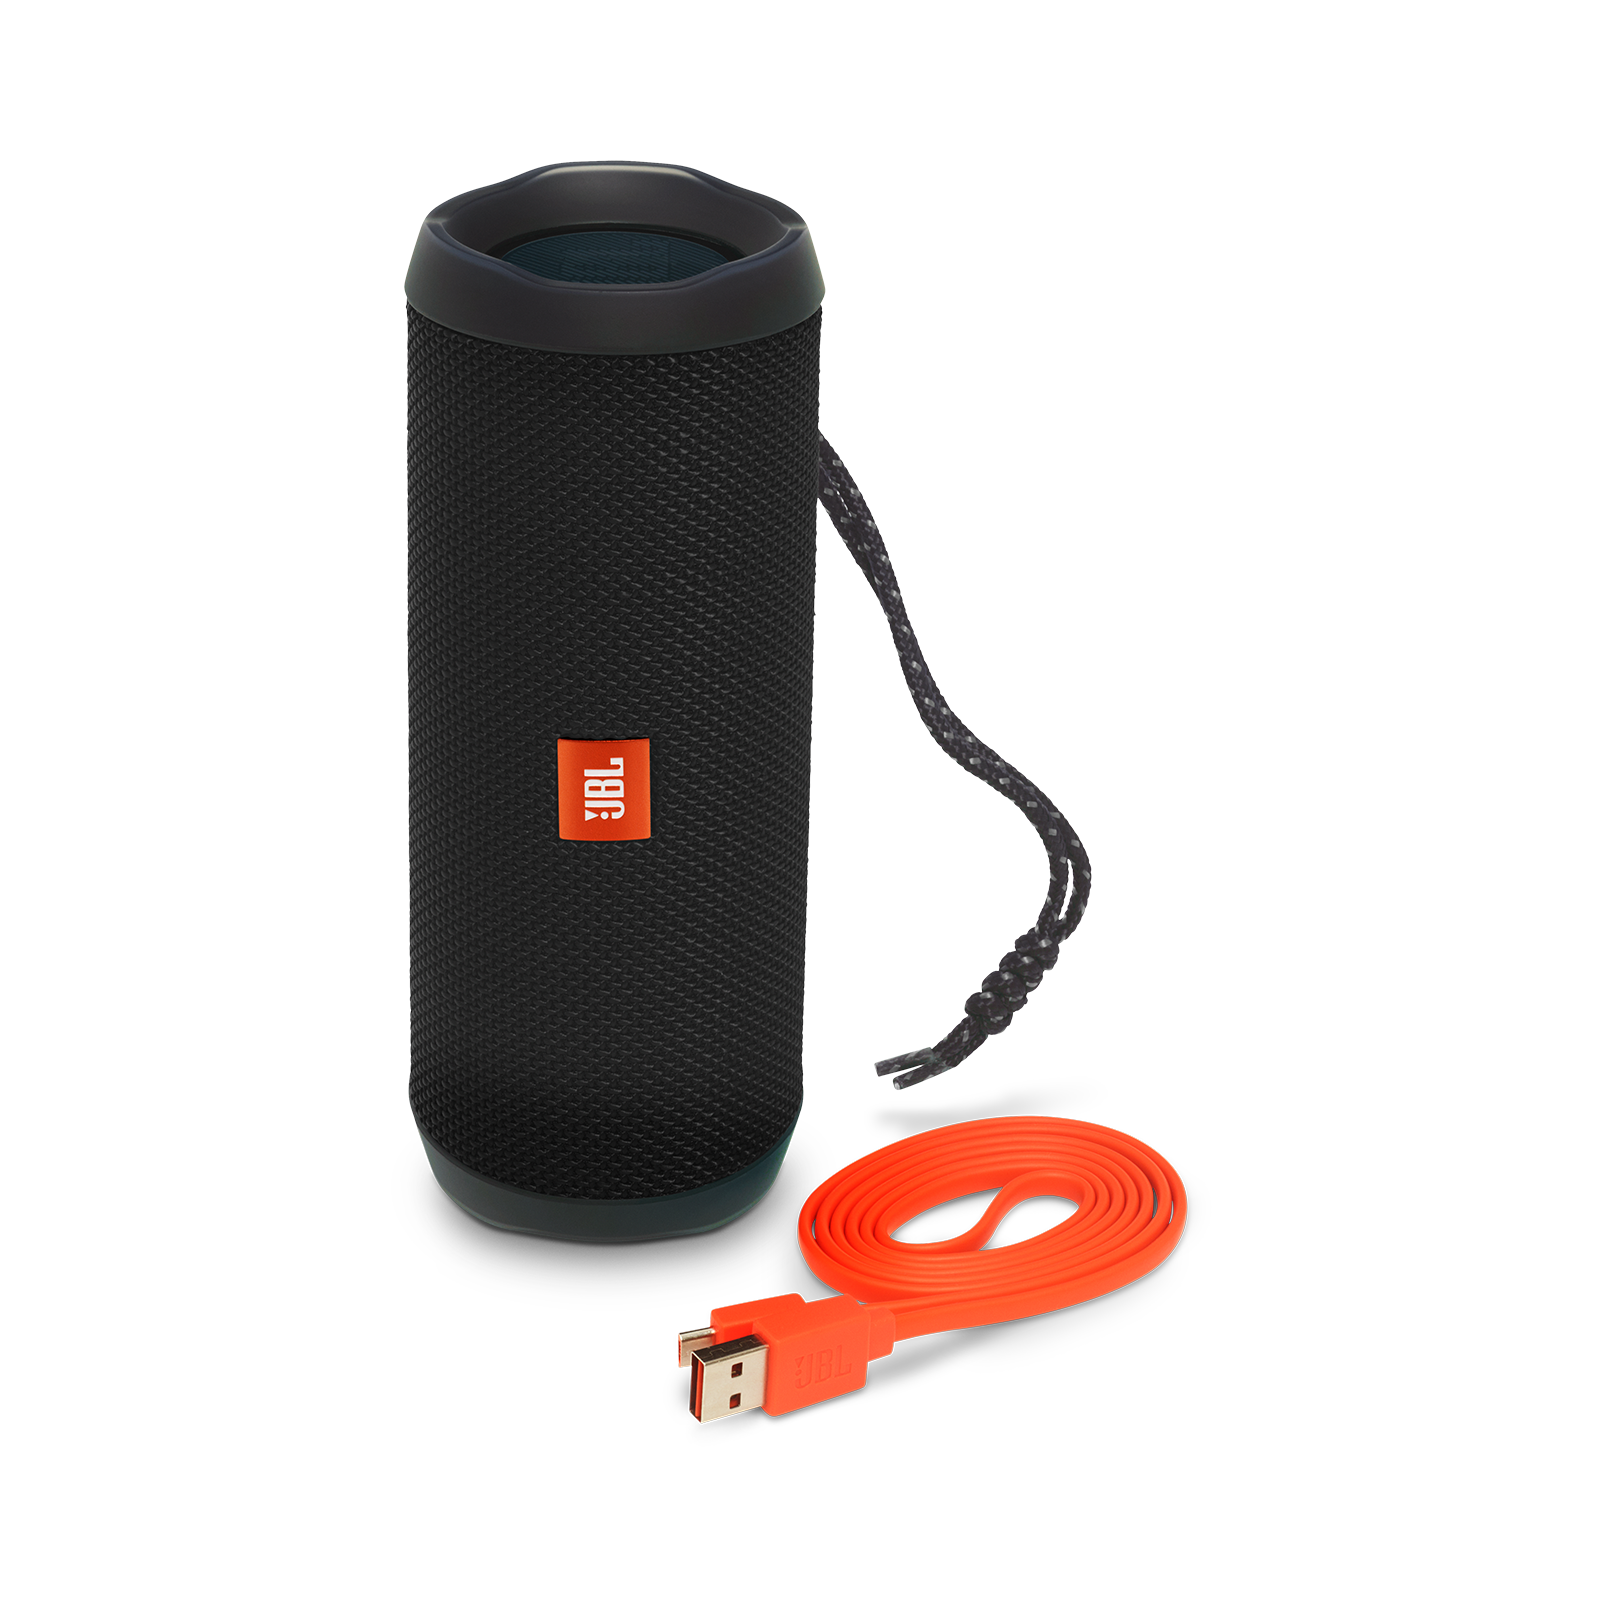 JBL Flip 4 - Black - A full-featured waterproof portable Bluetooth speaker with surprisingly powerful sound. - Detailshot 1